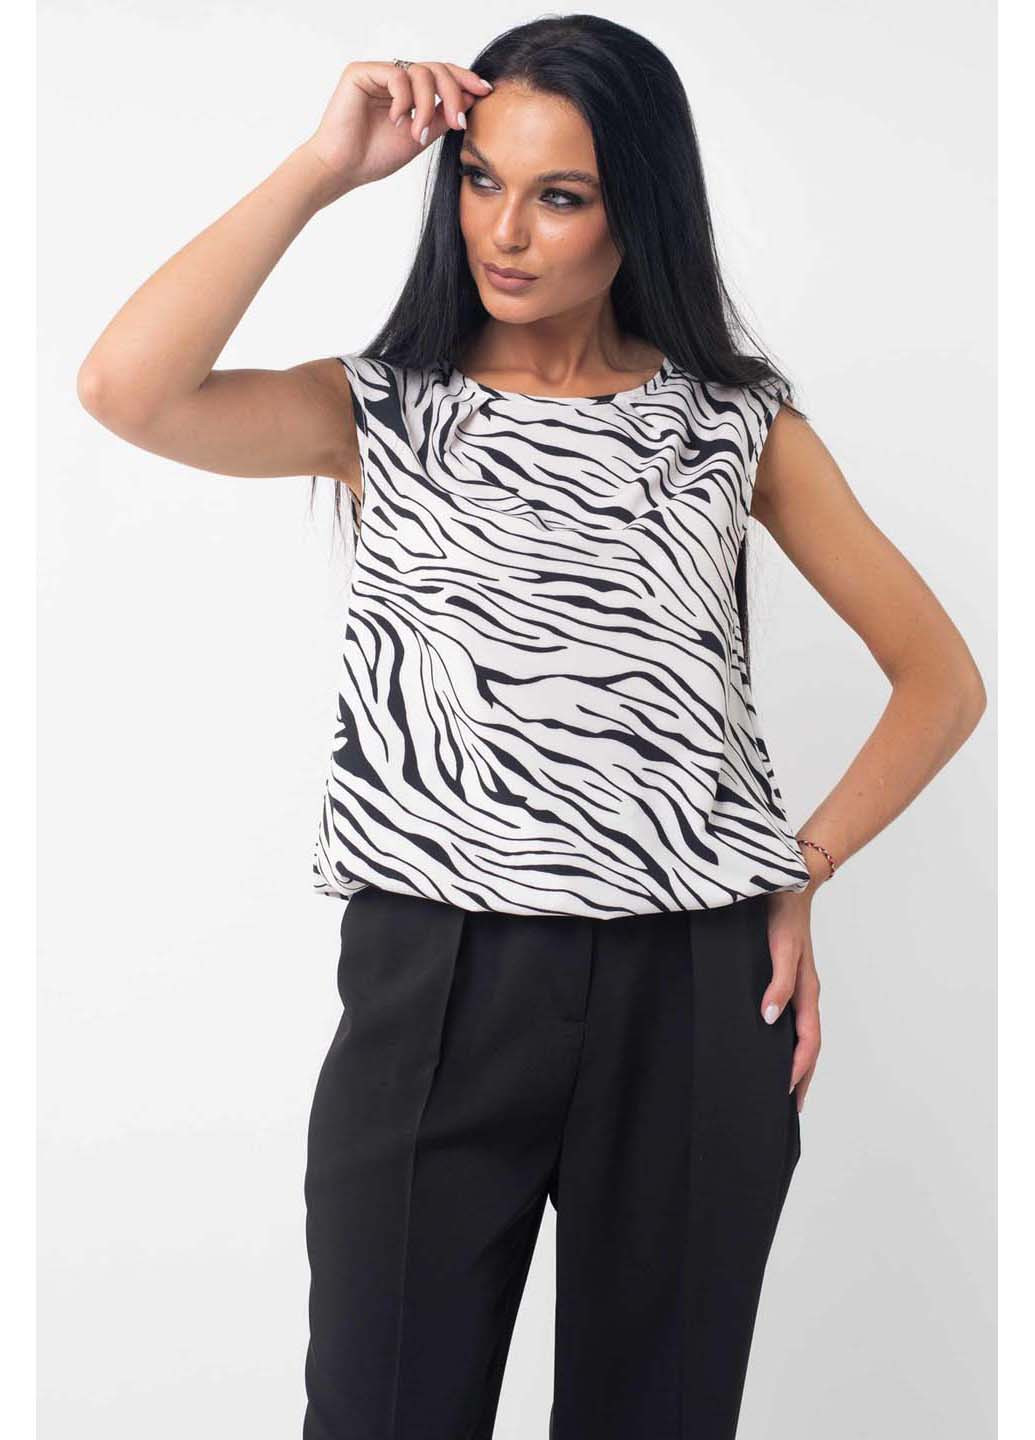 Черно-белая демисезонная блуза Ри Мари